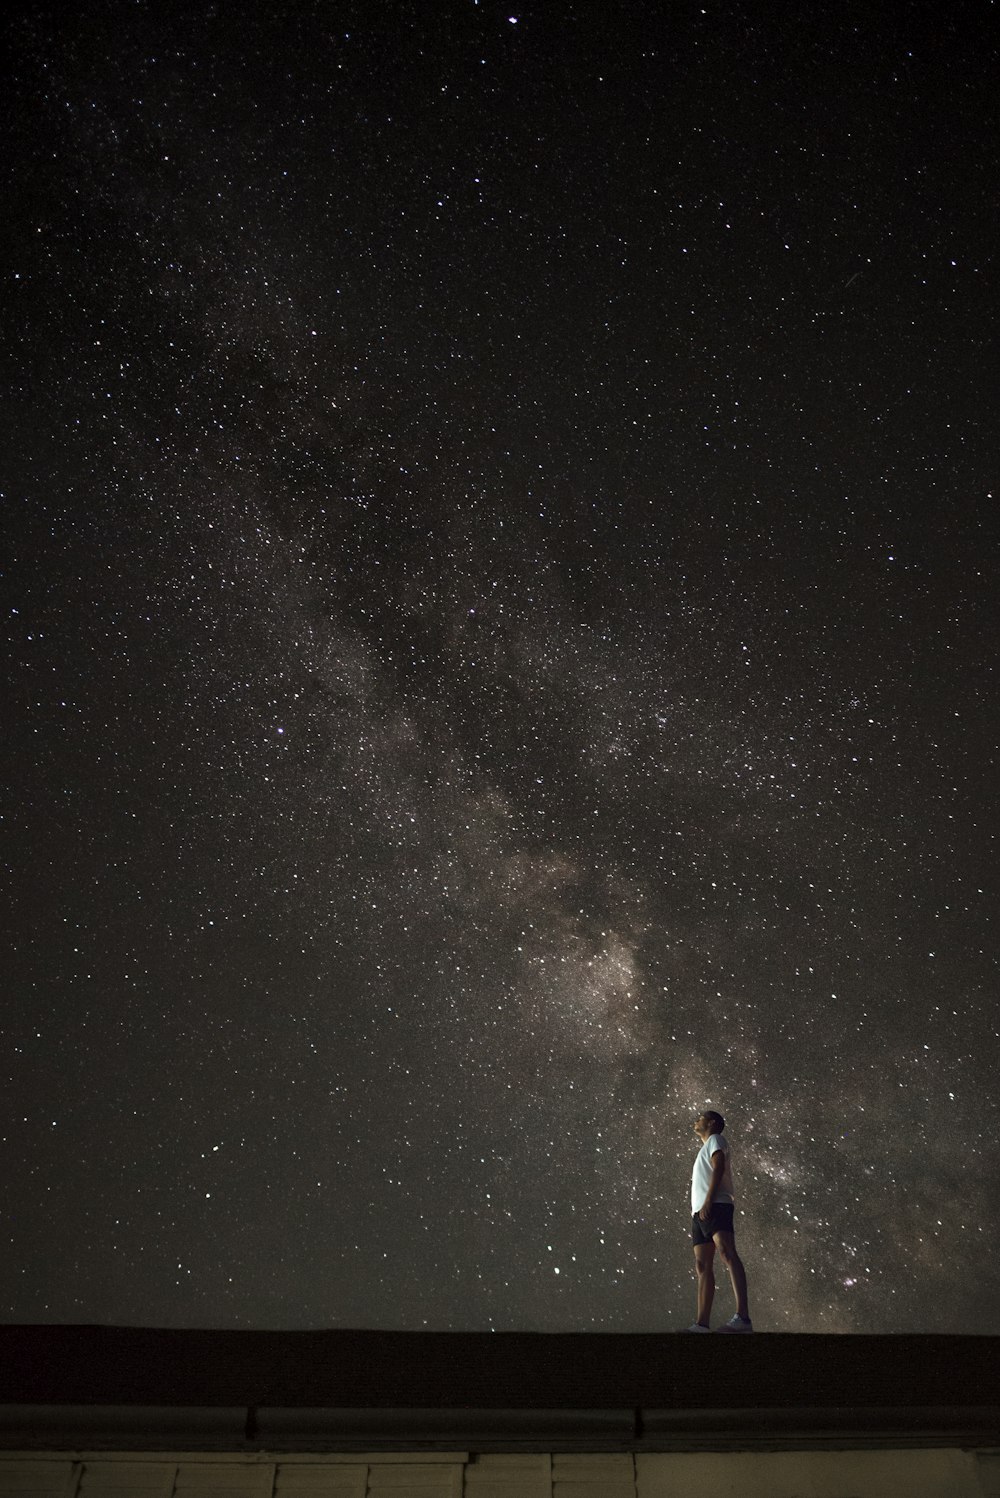 man looking up to Milky Way galaxy at night sky